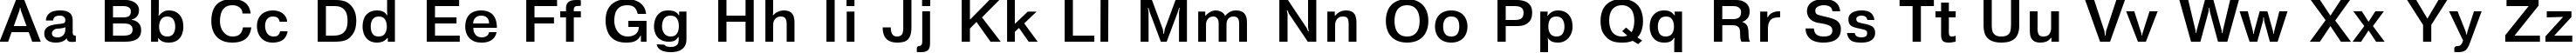 Пример написания английского алфавита шрифтом NTHarmonica Bold110b